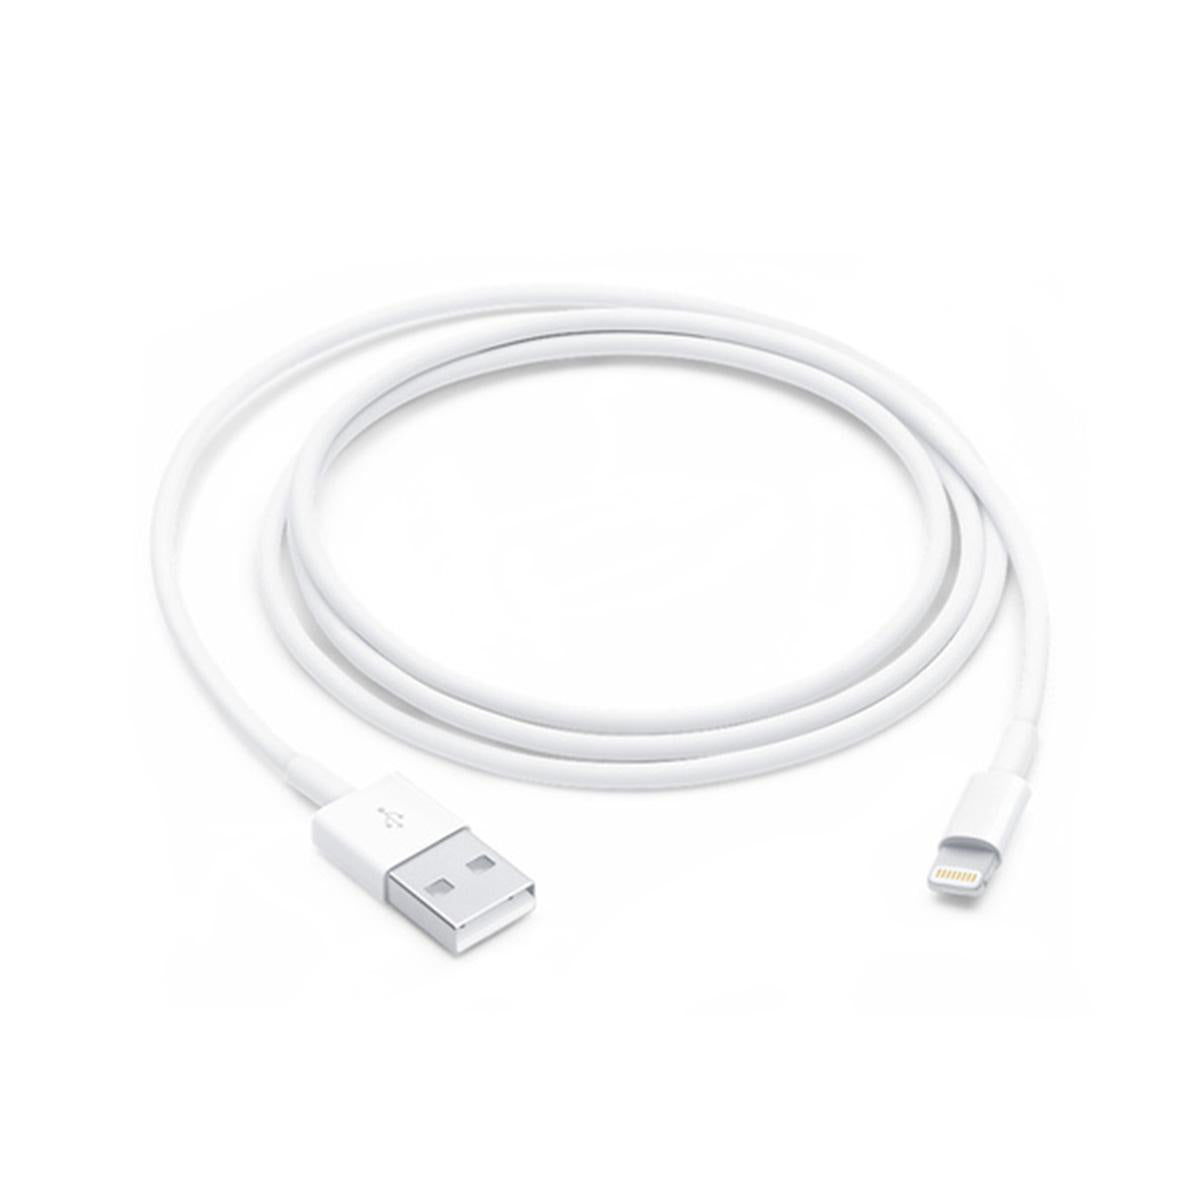 Apple Original Lightning to USB Cable (2M)